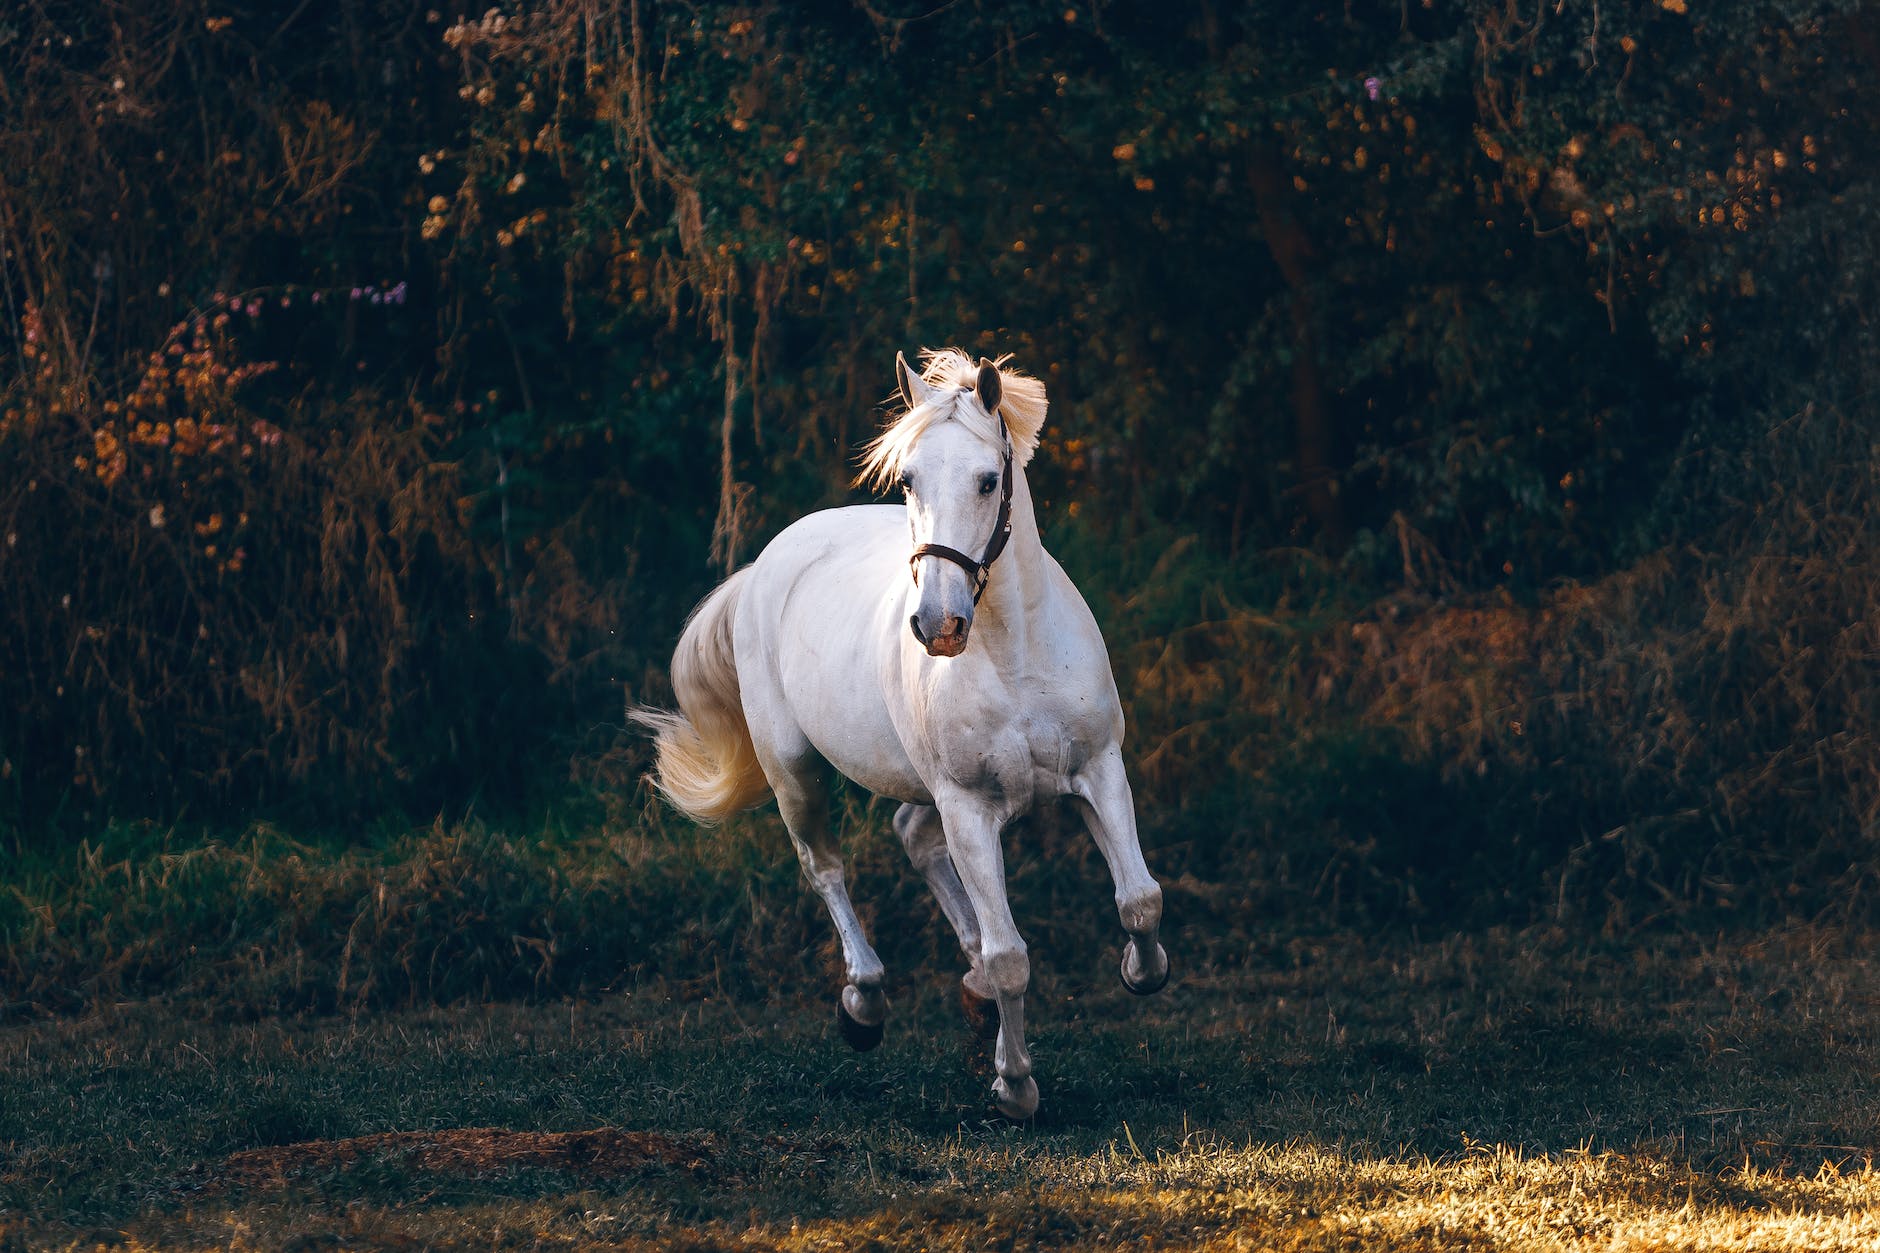 White Horse Running on Green Field